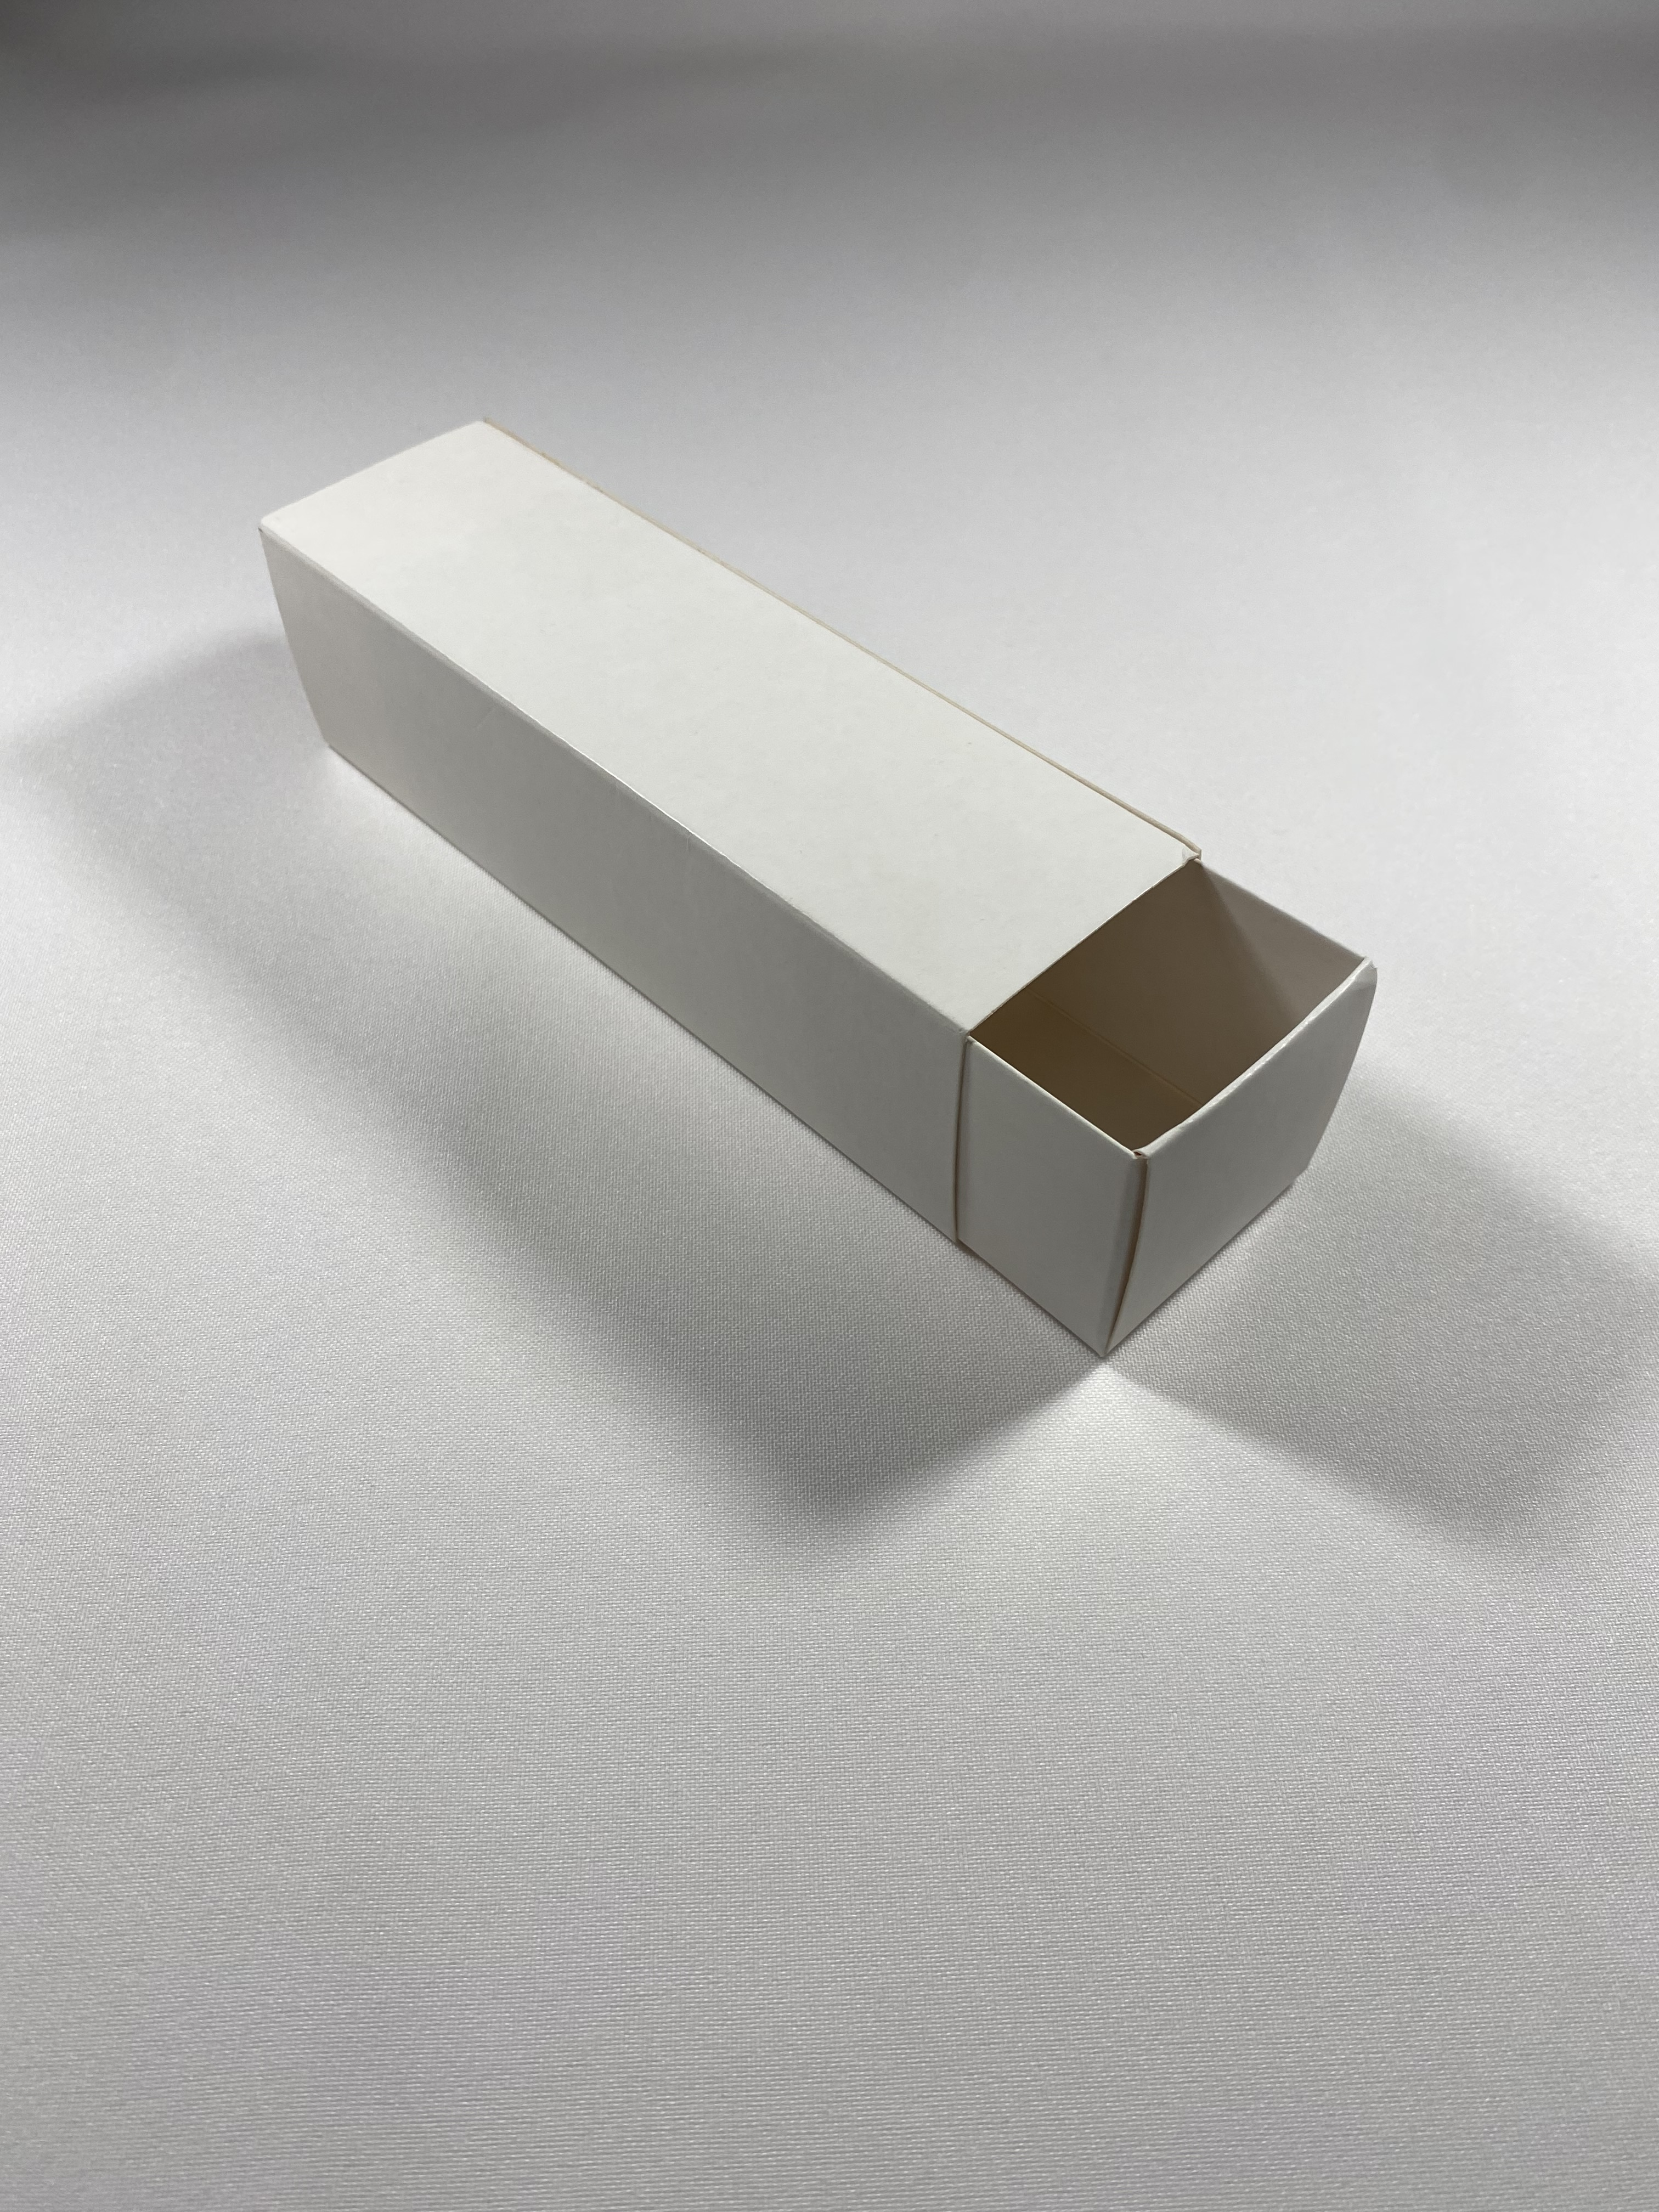 Obrázek k výrobku 19731 - Krabička na makrónky (16 x 4,5 x 4,5 cm) biela